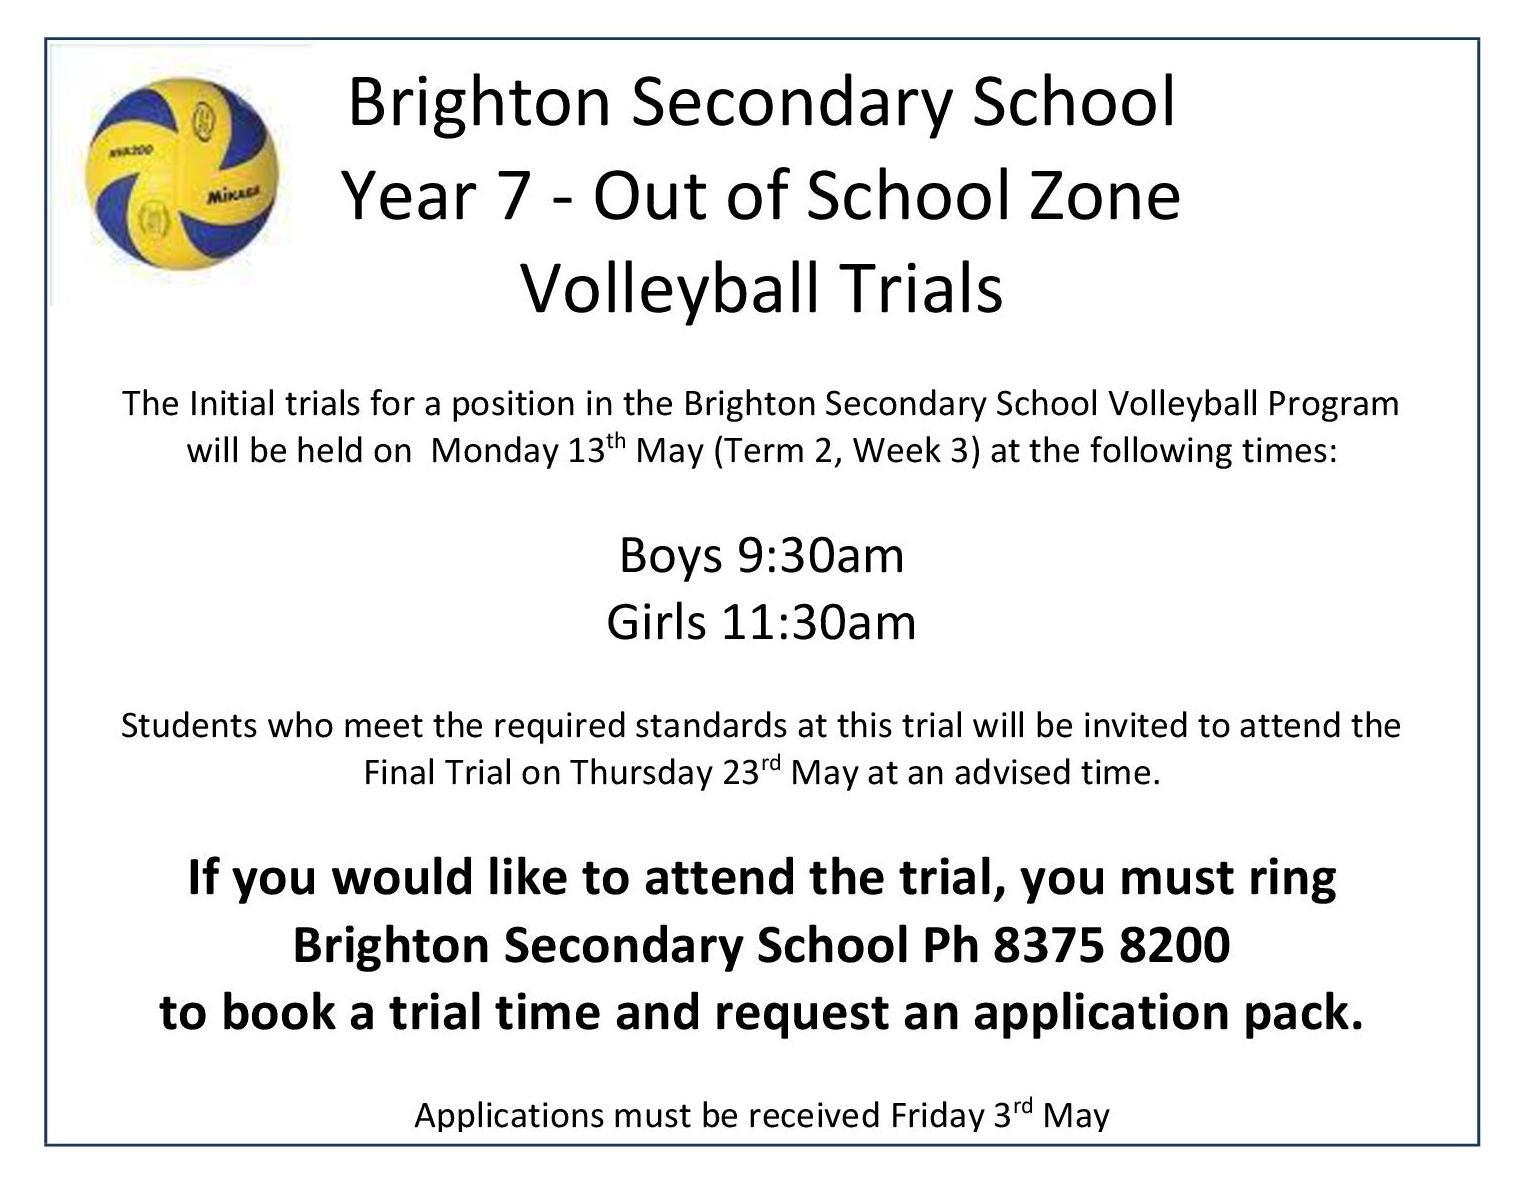 Brighton Secondary School Volleyball Program Trials